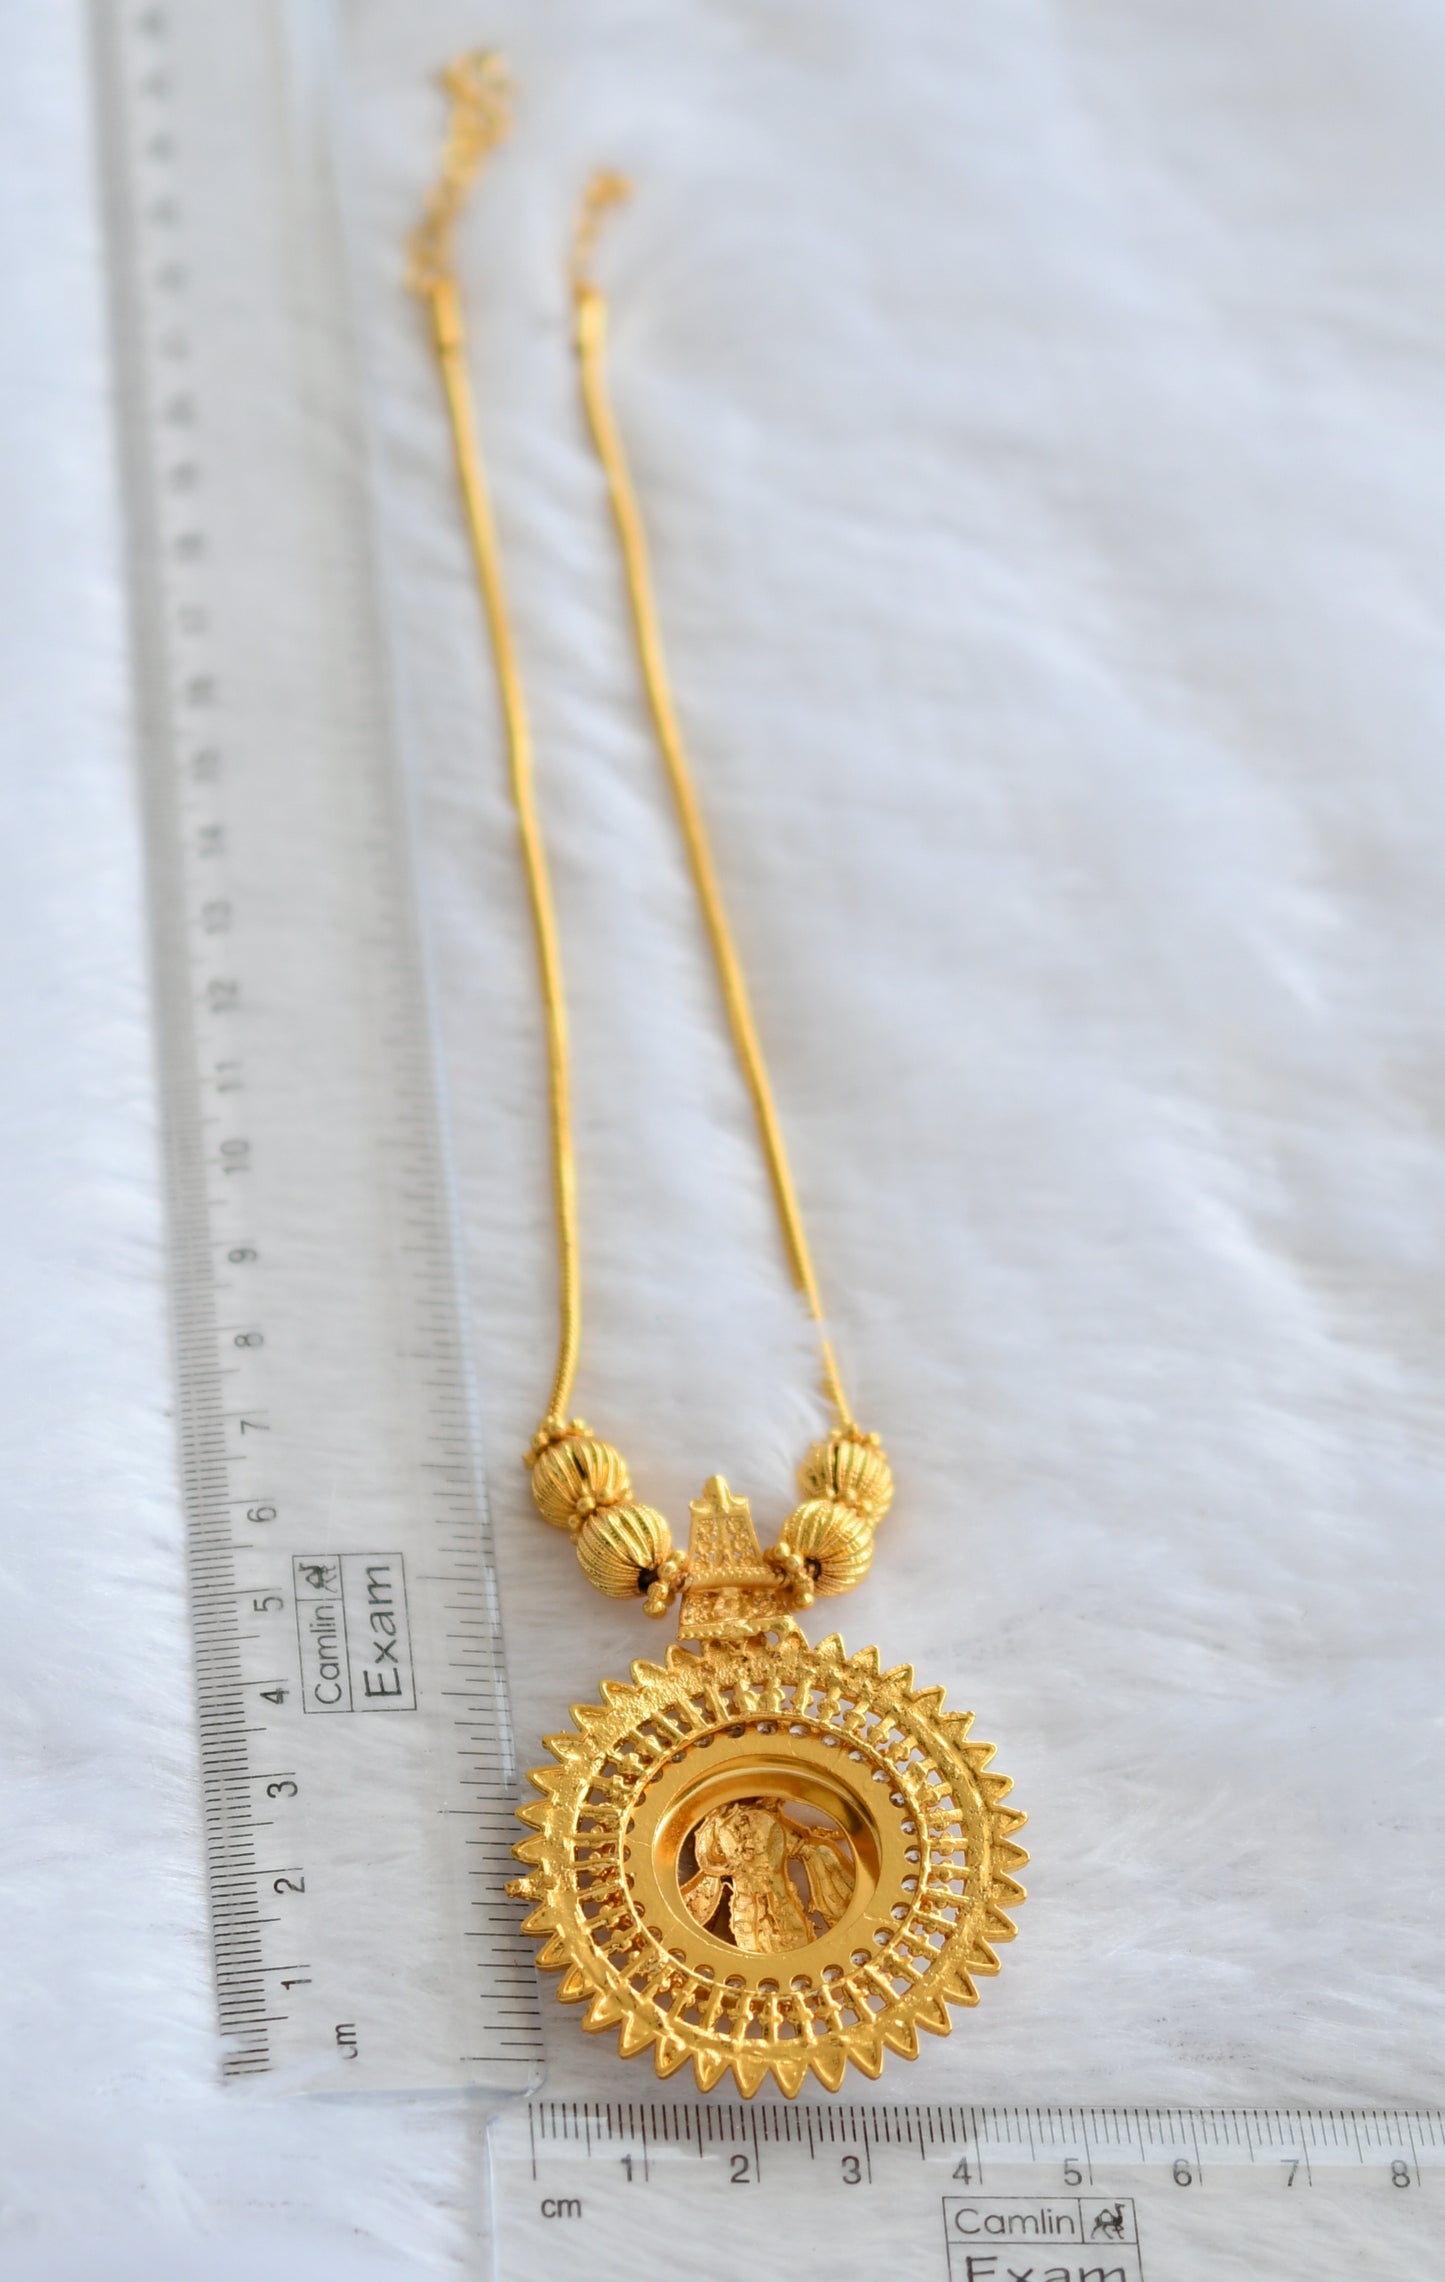 Gold tone white kerala style krishna round kodi necklace dj-46361